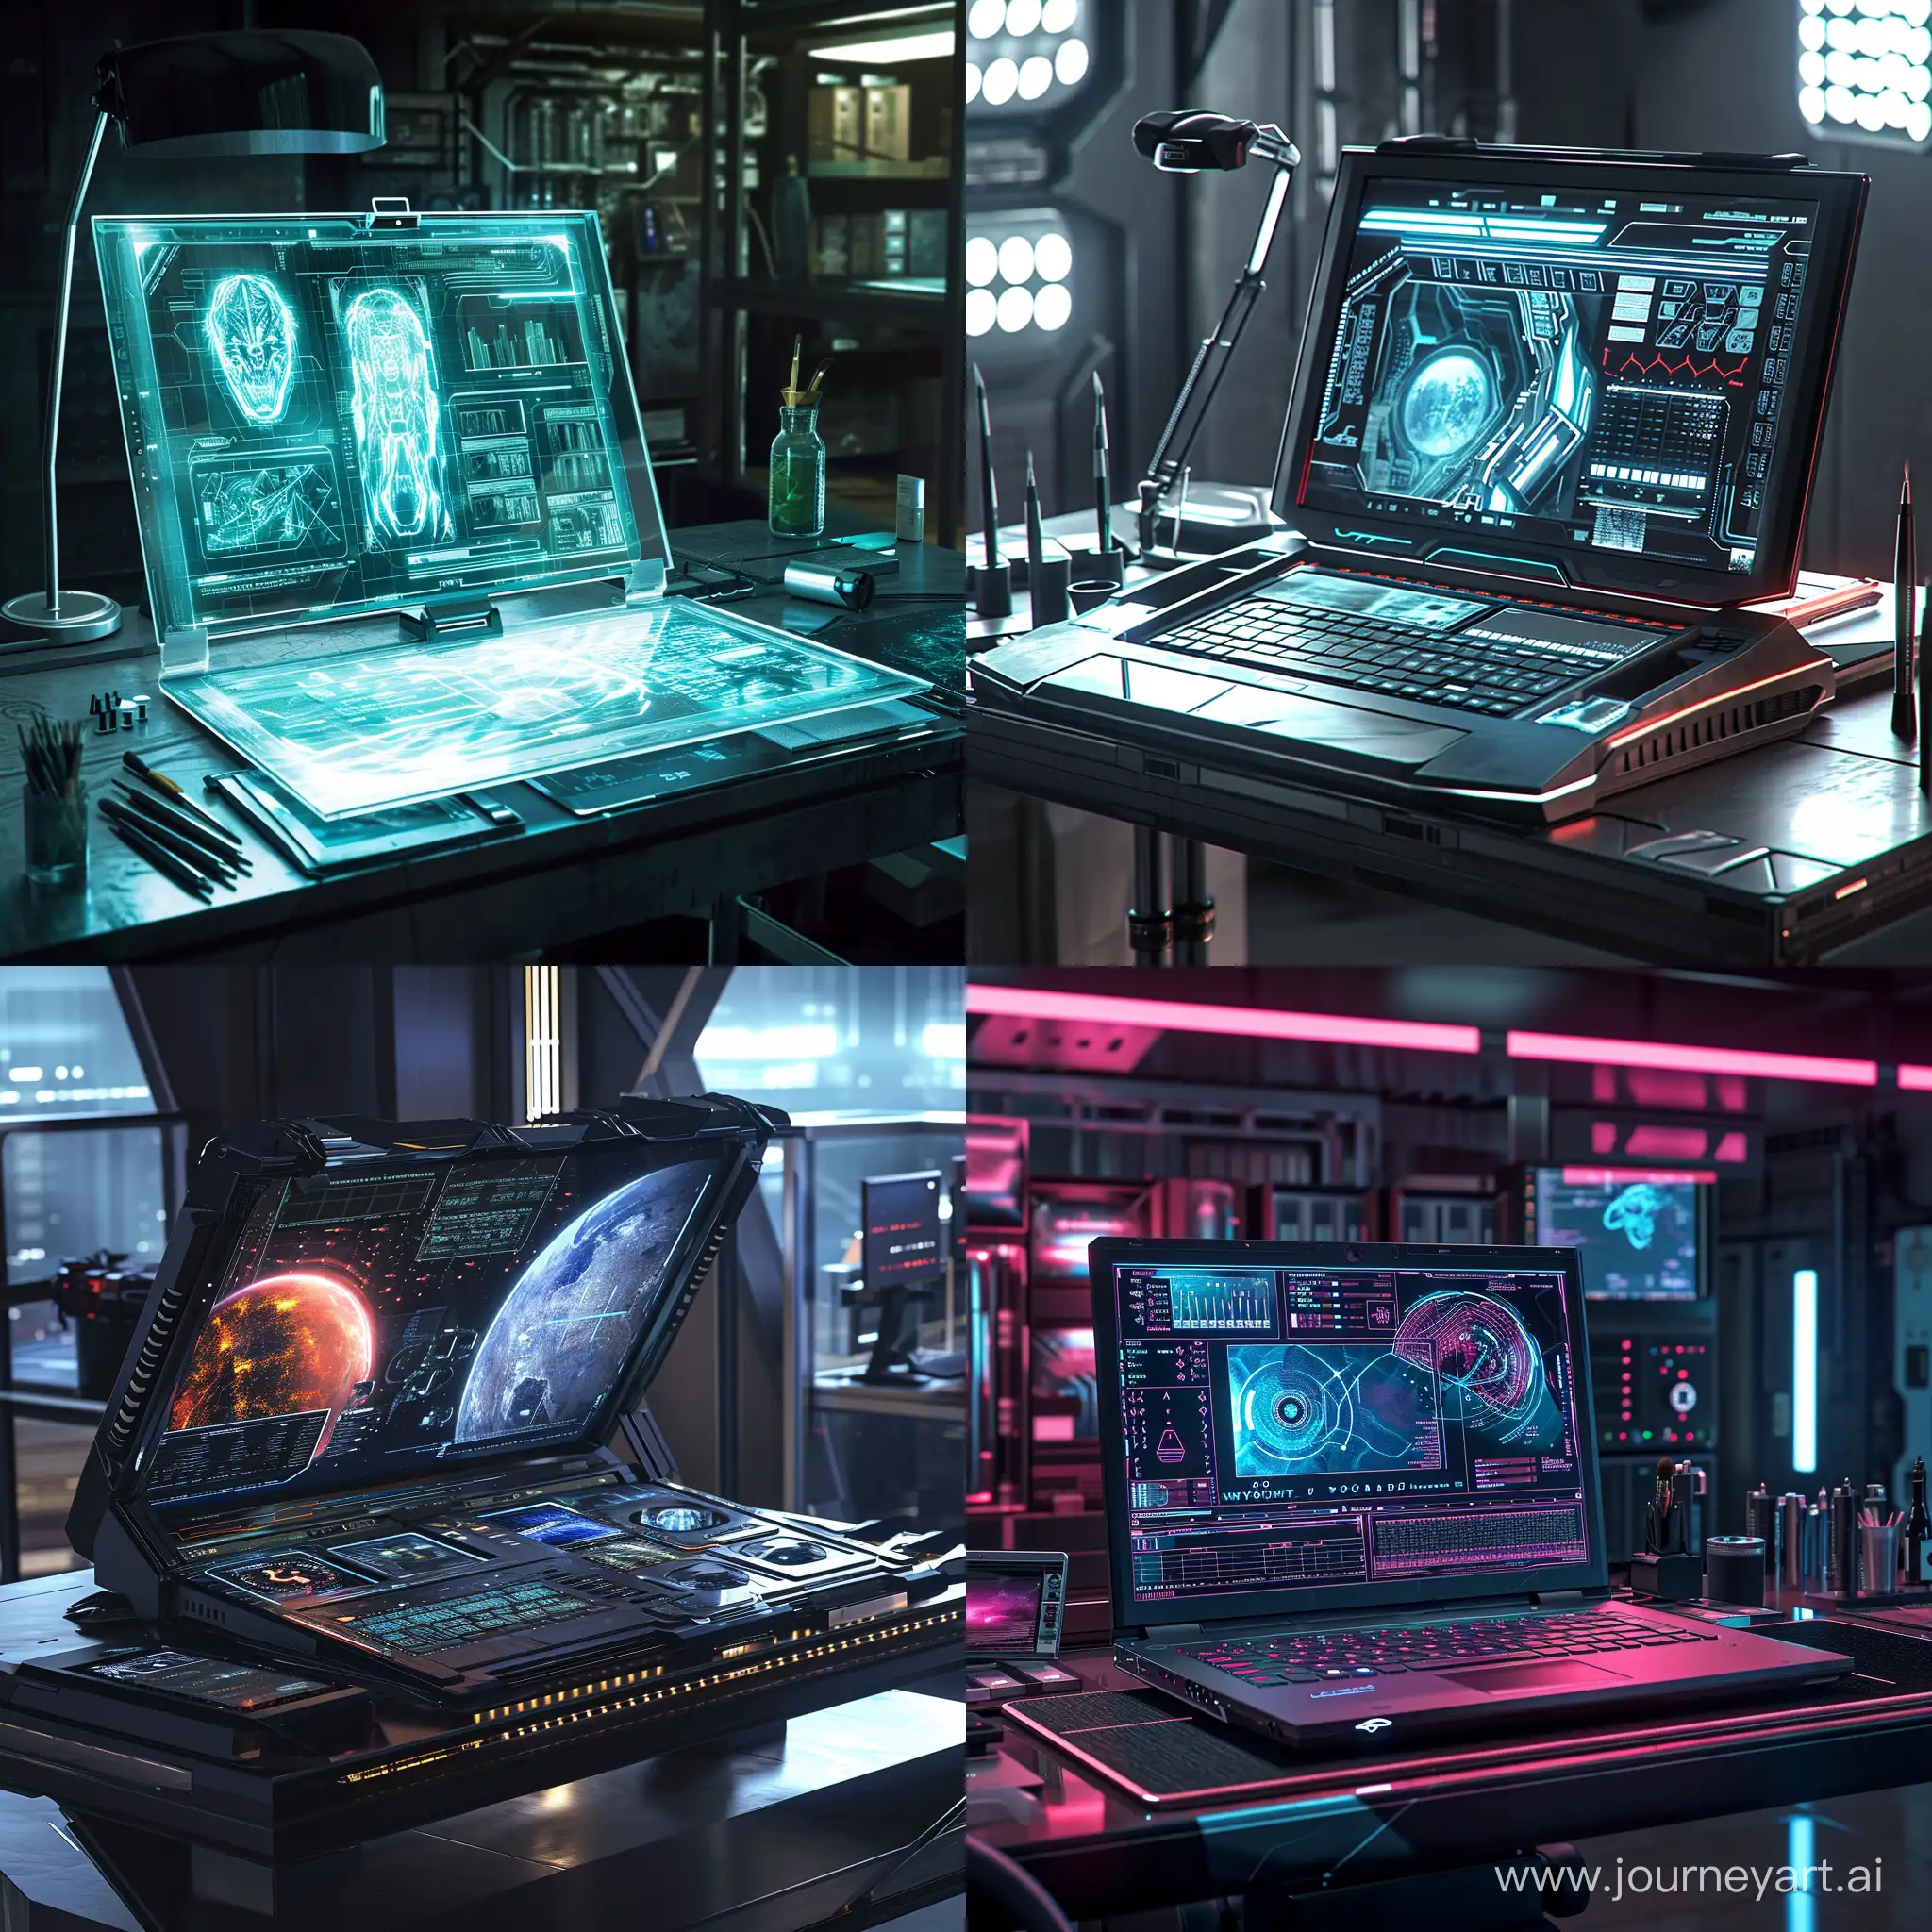 Futuristic-Laptop-on-ArtStation-Science-Fiction-Digital-Art